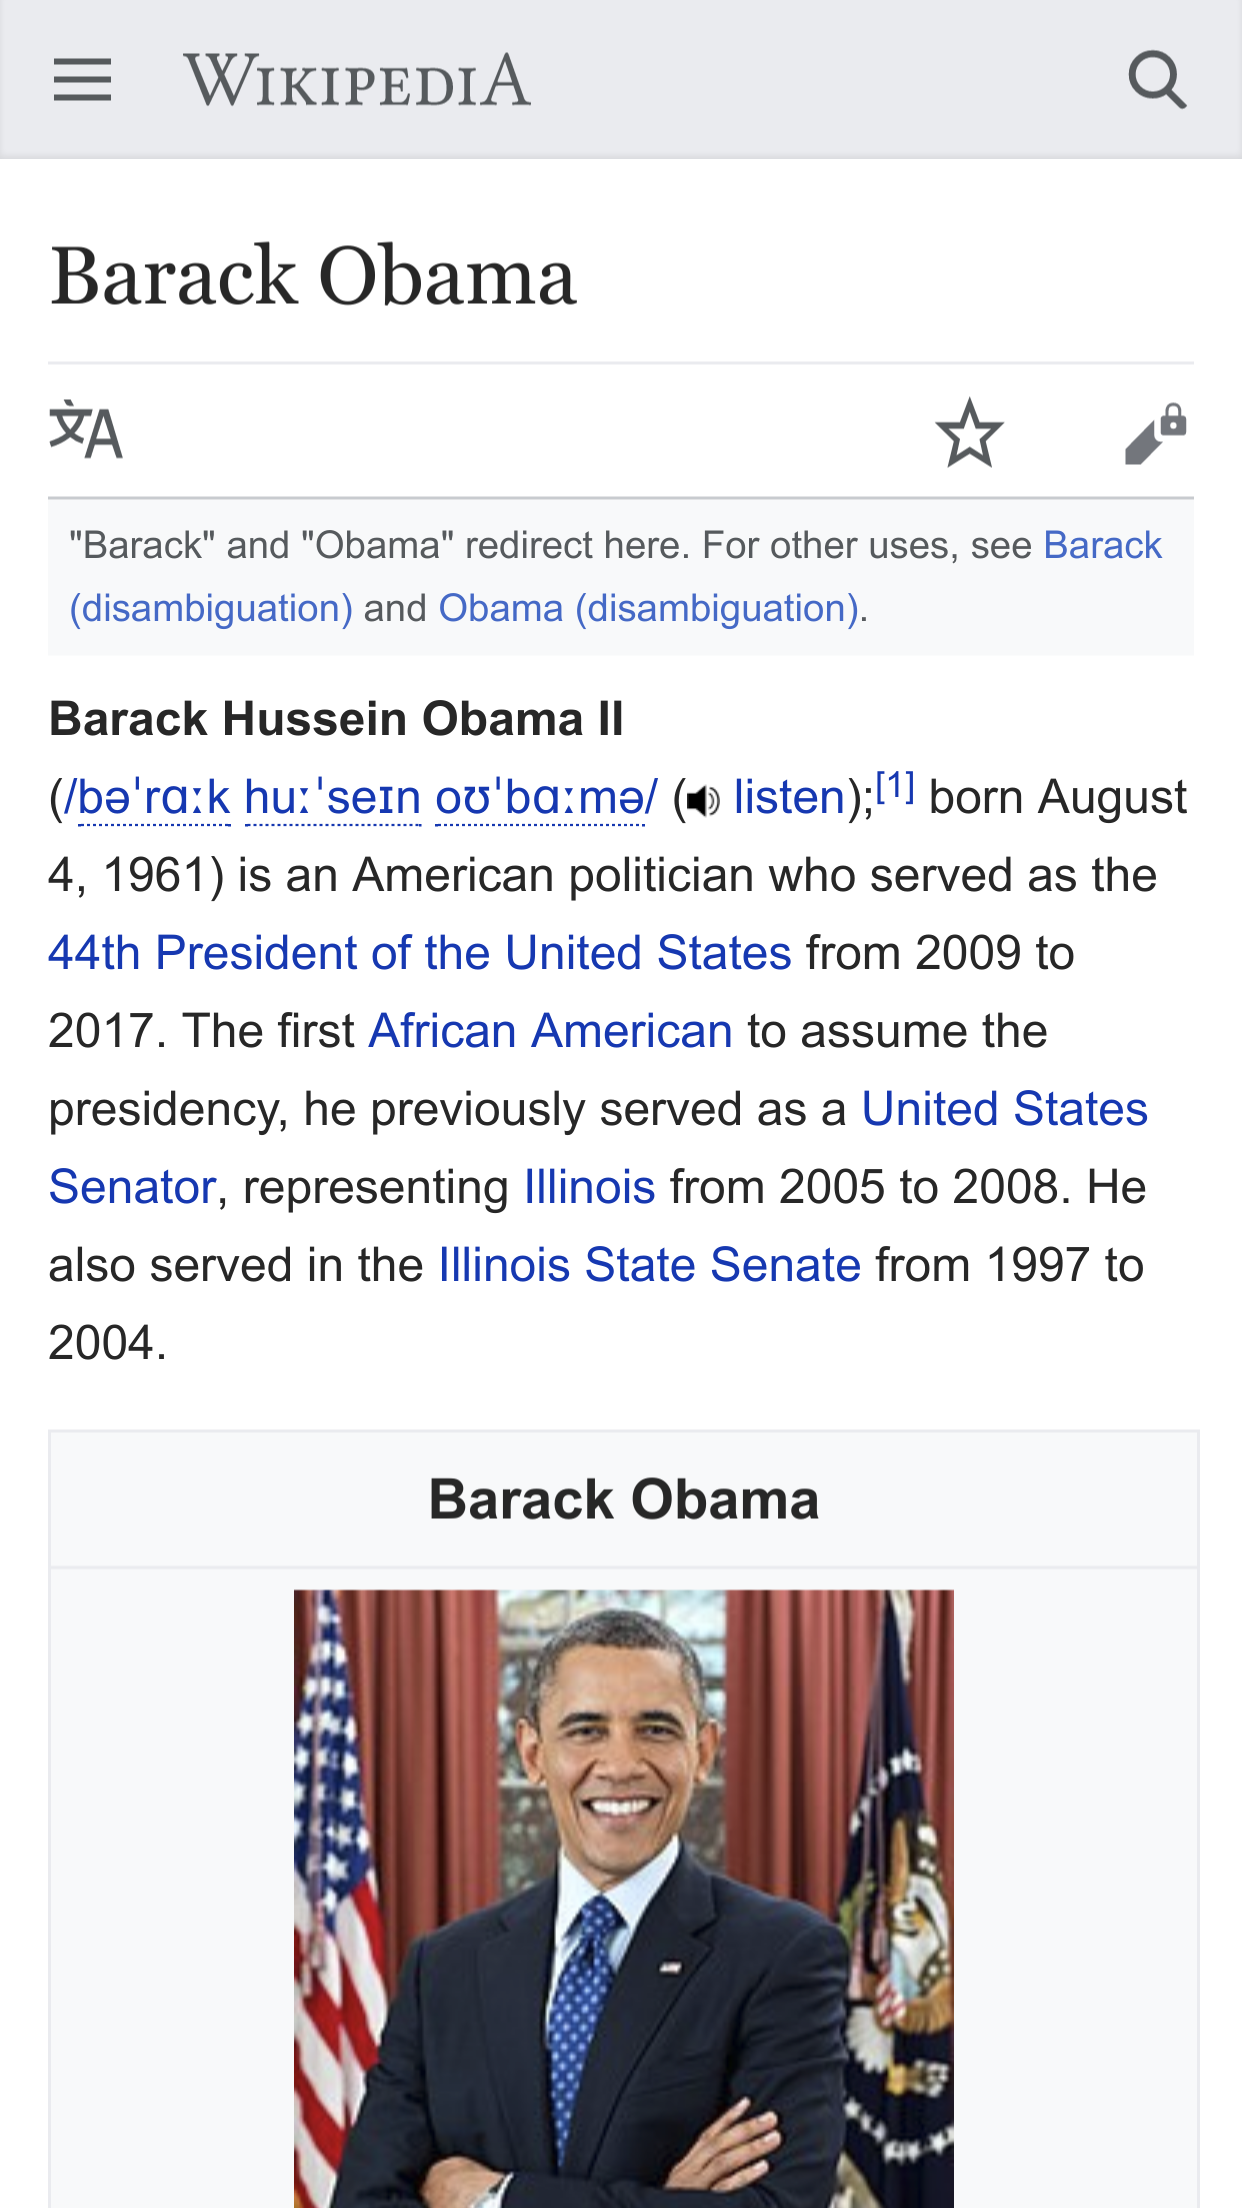 en.m.wikipedia.org_wiki_Barack_Obama(iPhone 6 Plus) (2).png (2×1 px, 952 KB)